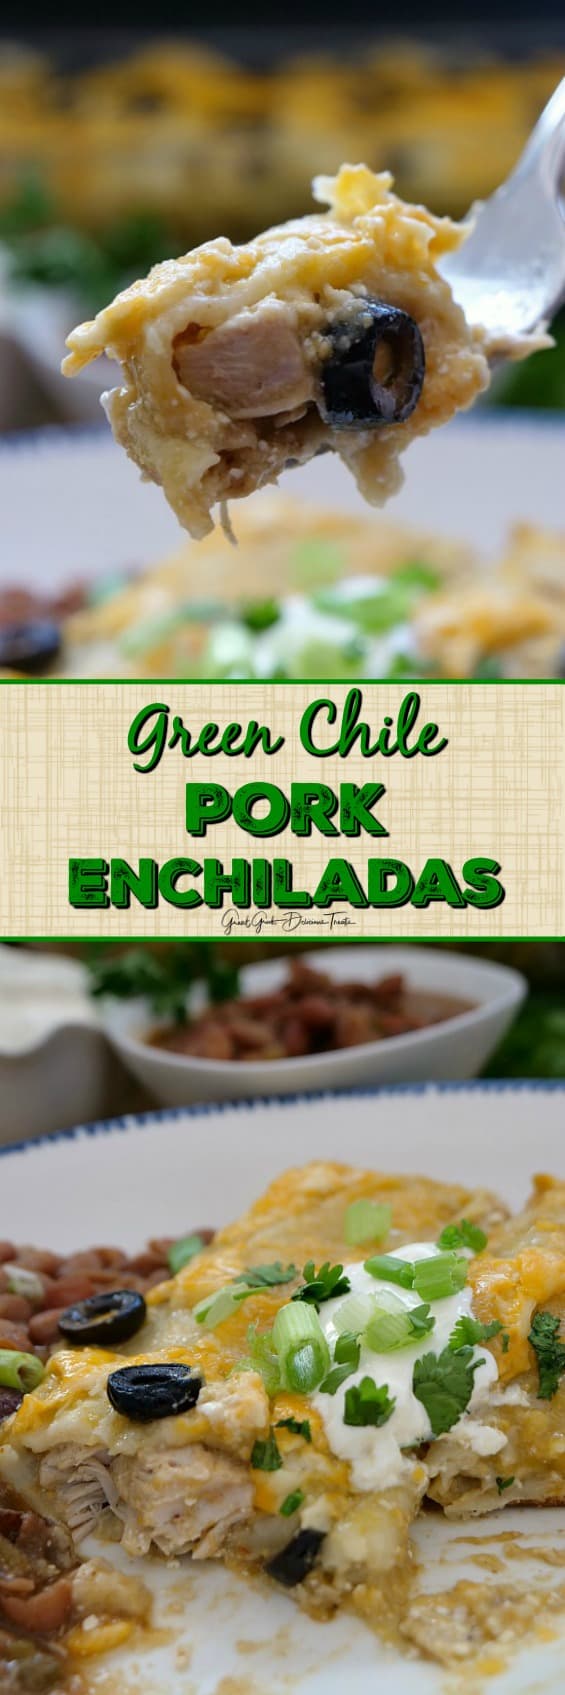 Green Chile Pork Enchiladas